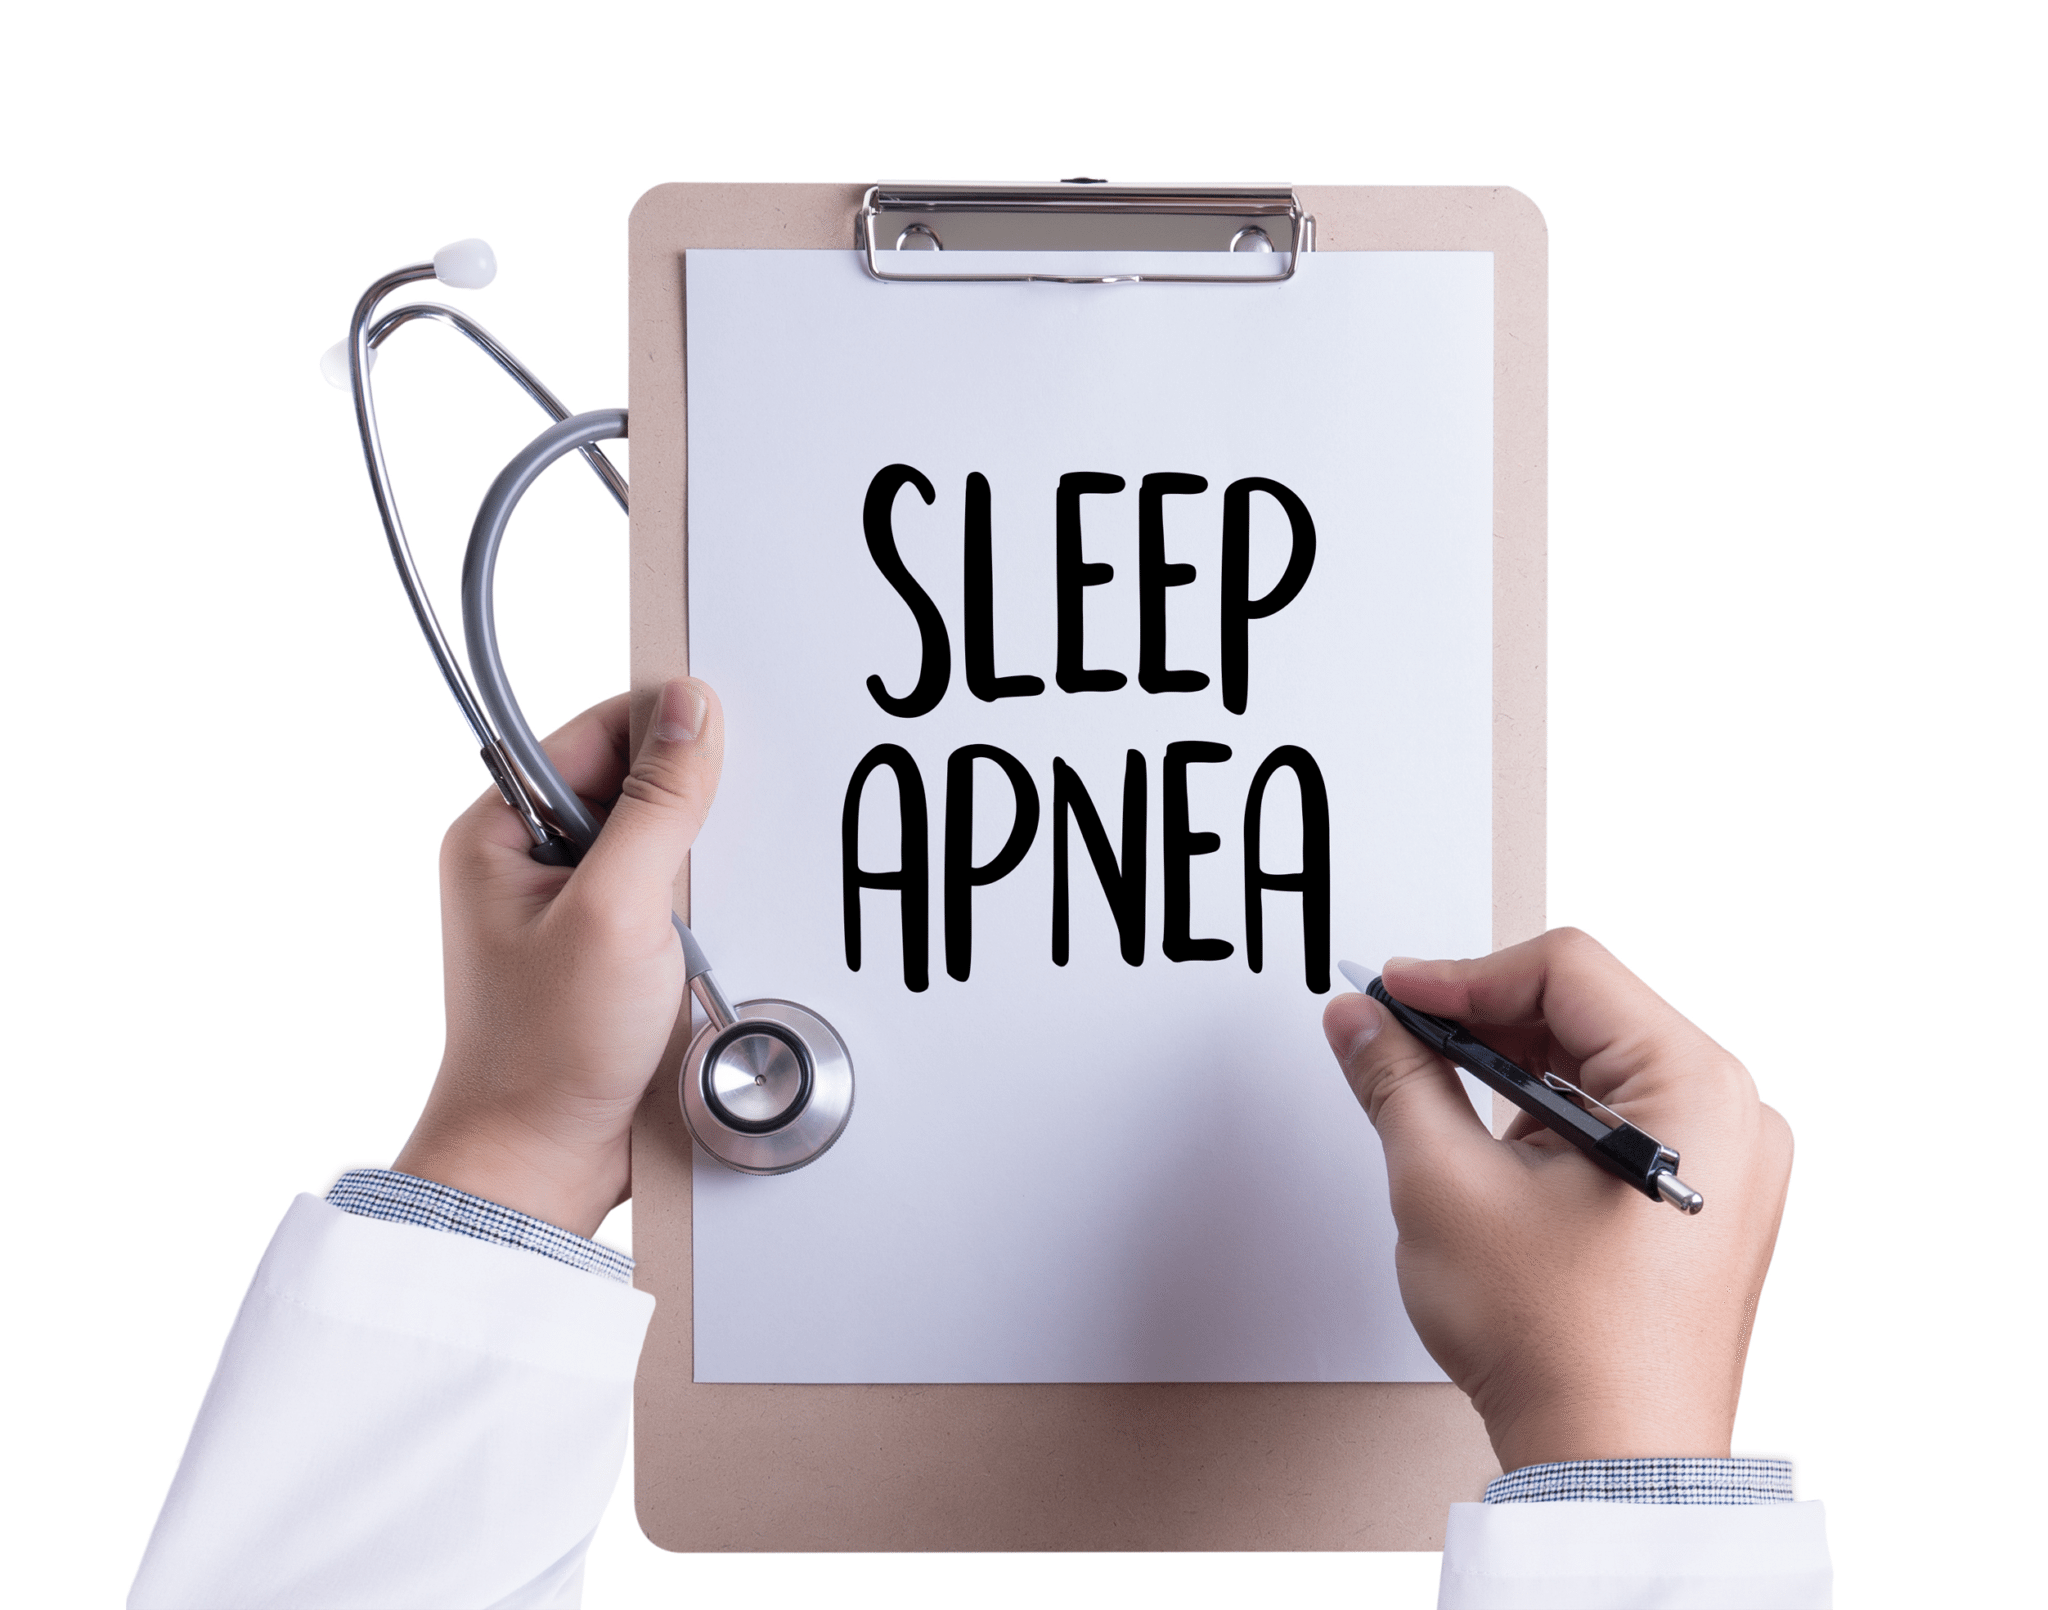 Three Different Ways You Can Screen For Sleep Apnea